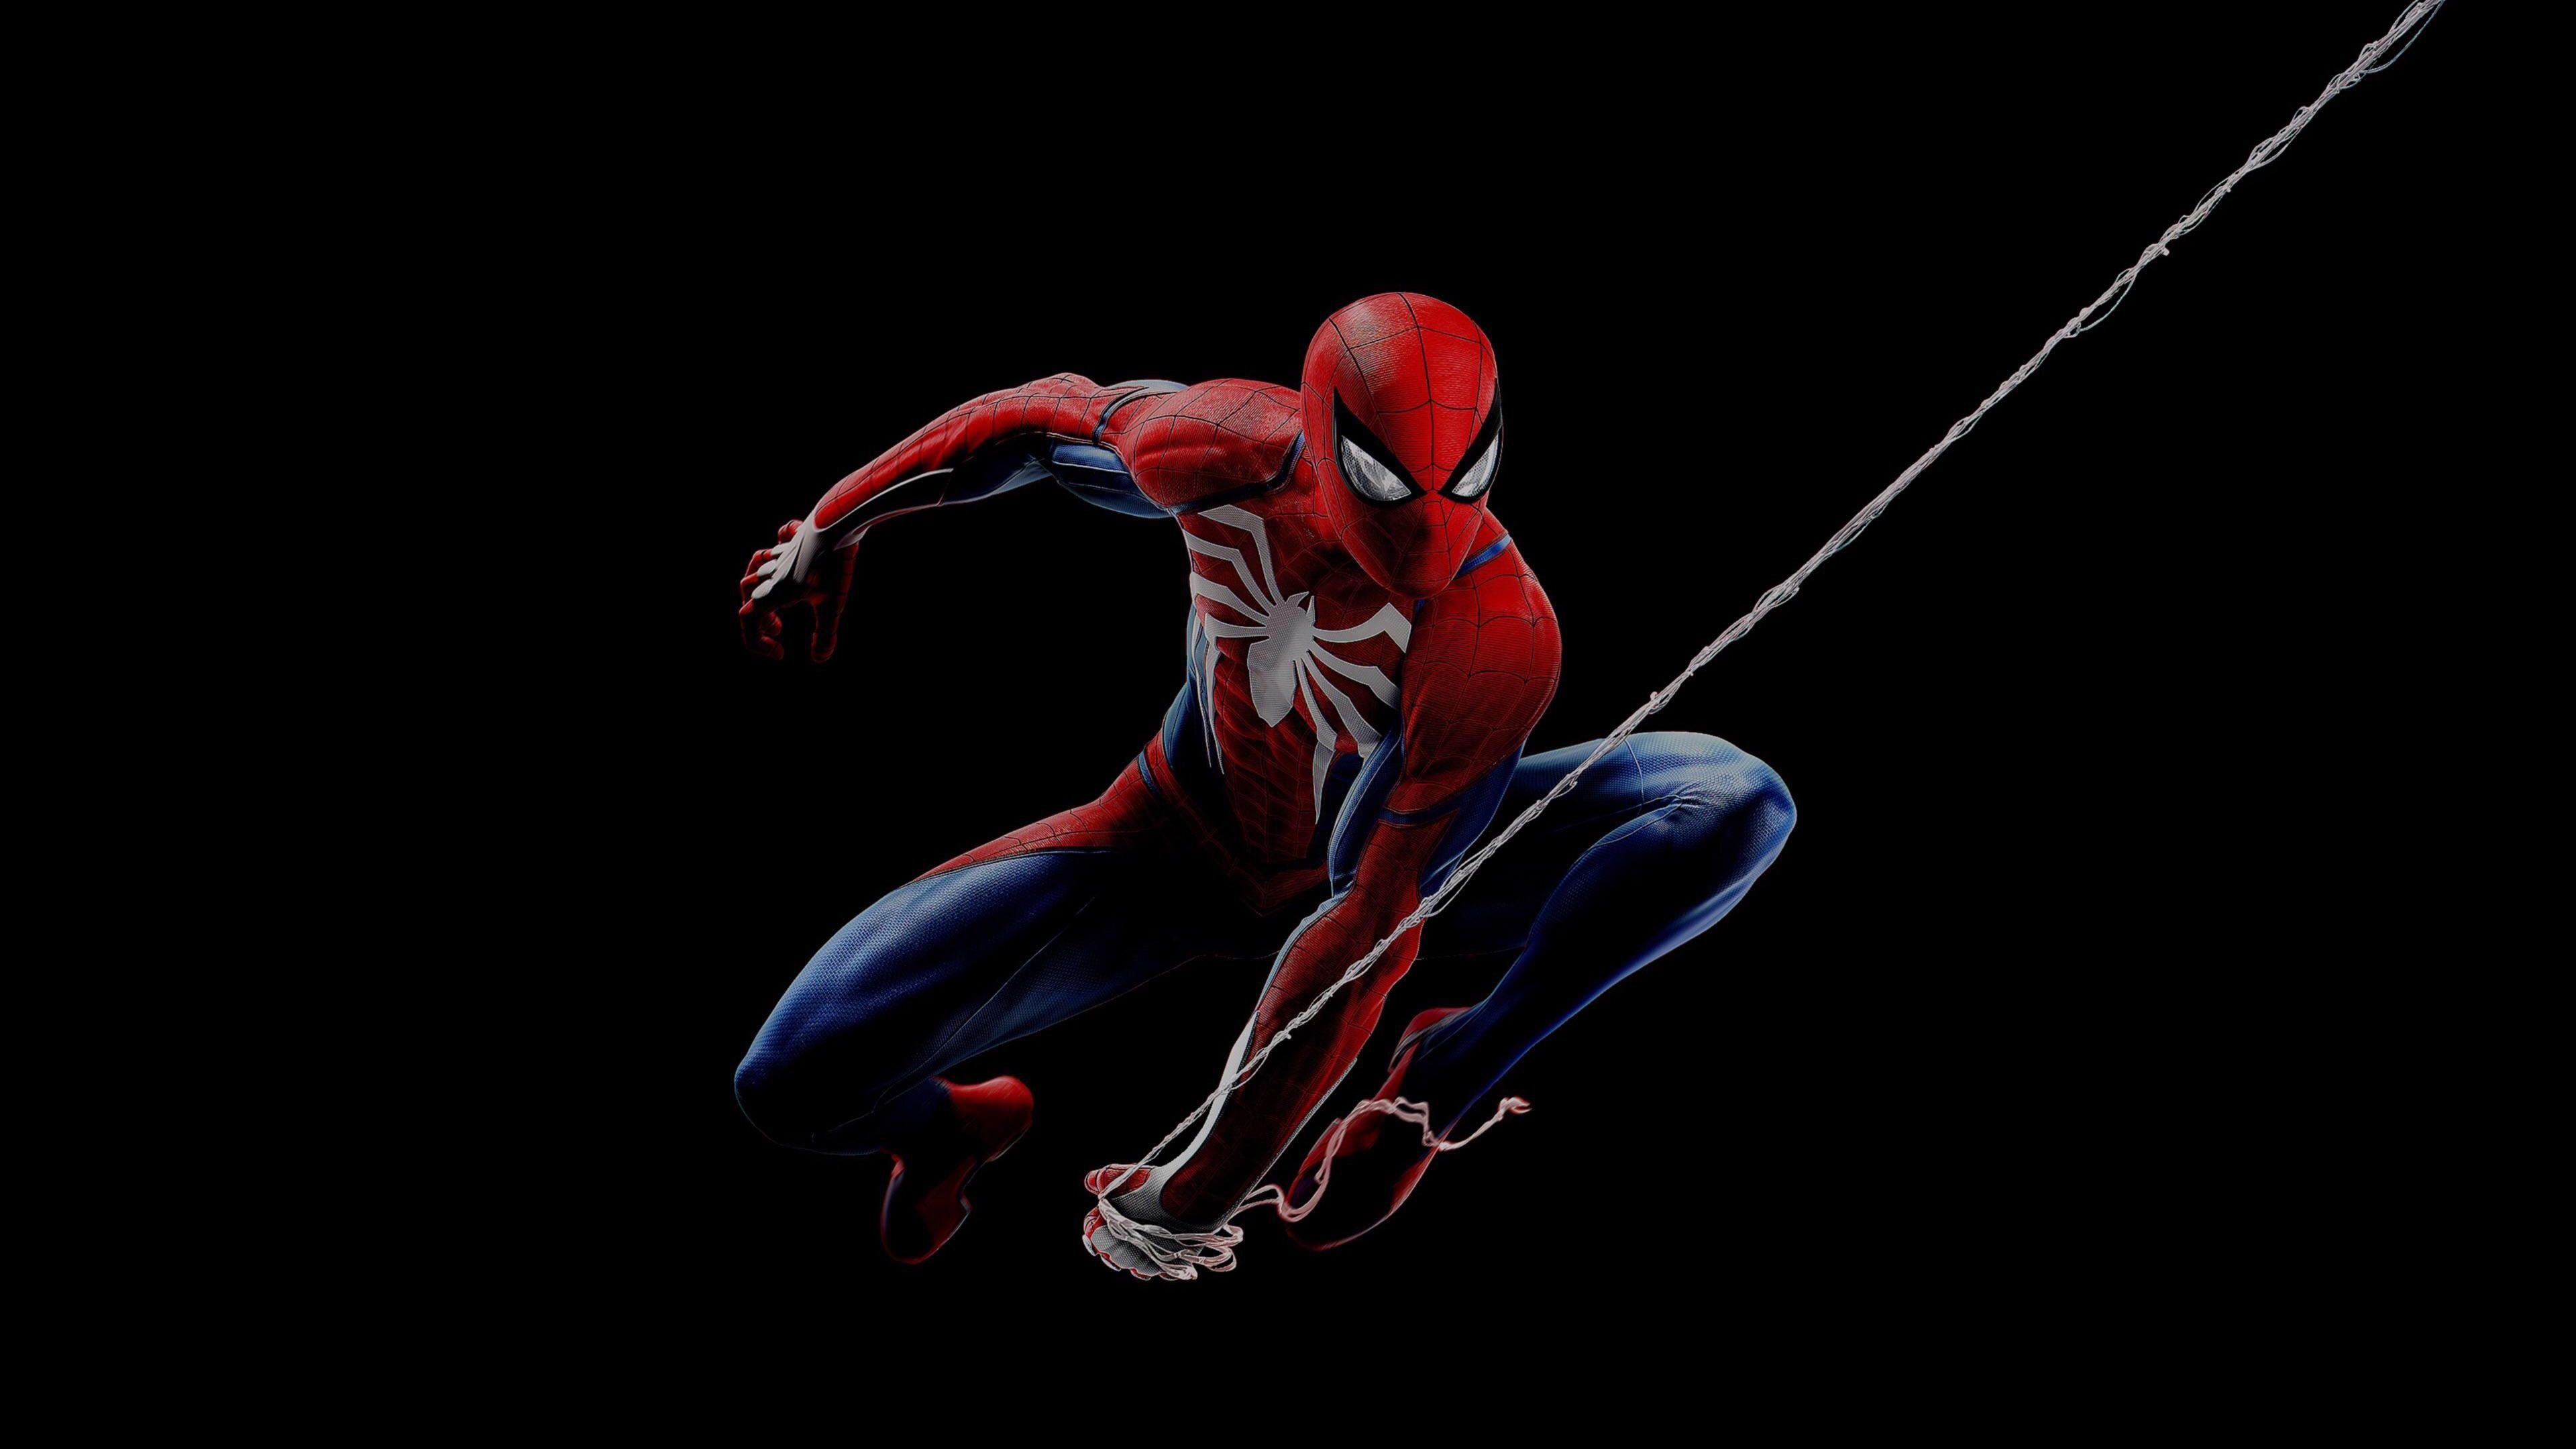 Wallpaper Spider Man, Marvel Comics, PS PlayStation Dark Background, 4K, Black Dark,. Wallpaper For IPhone, Android, Mobile And Desktop